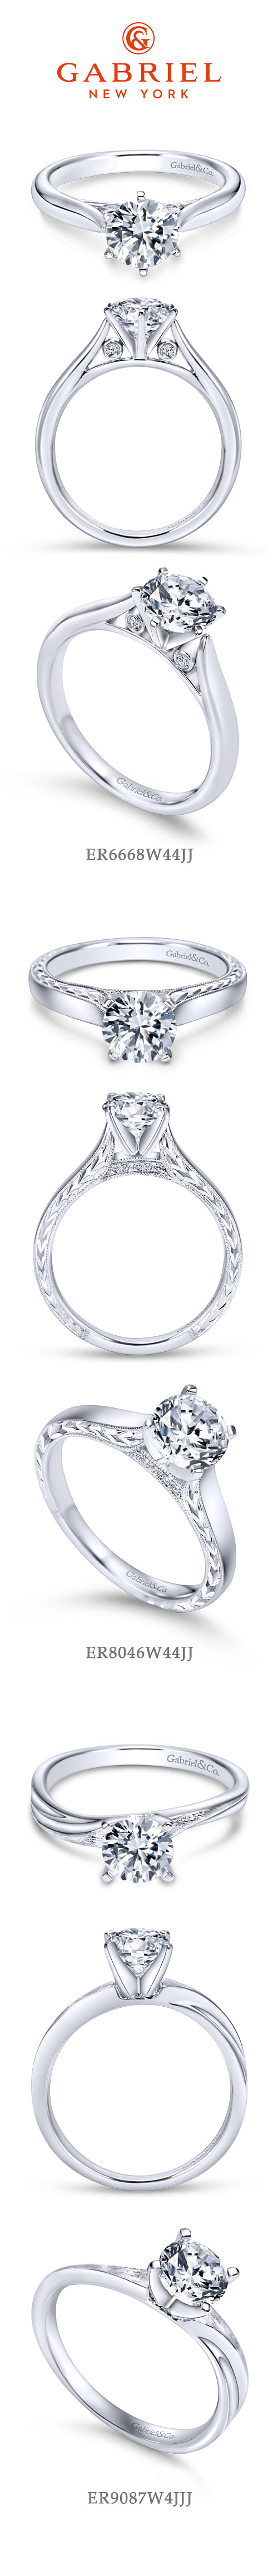 Vintage Inspired 14K White Gold Round Diamond Engagement Ring angle 